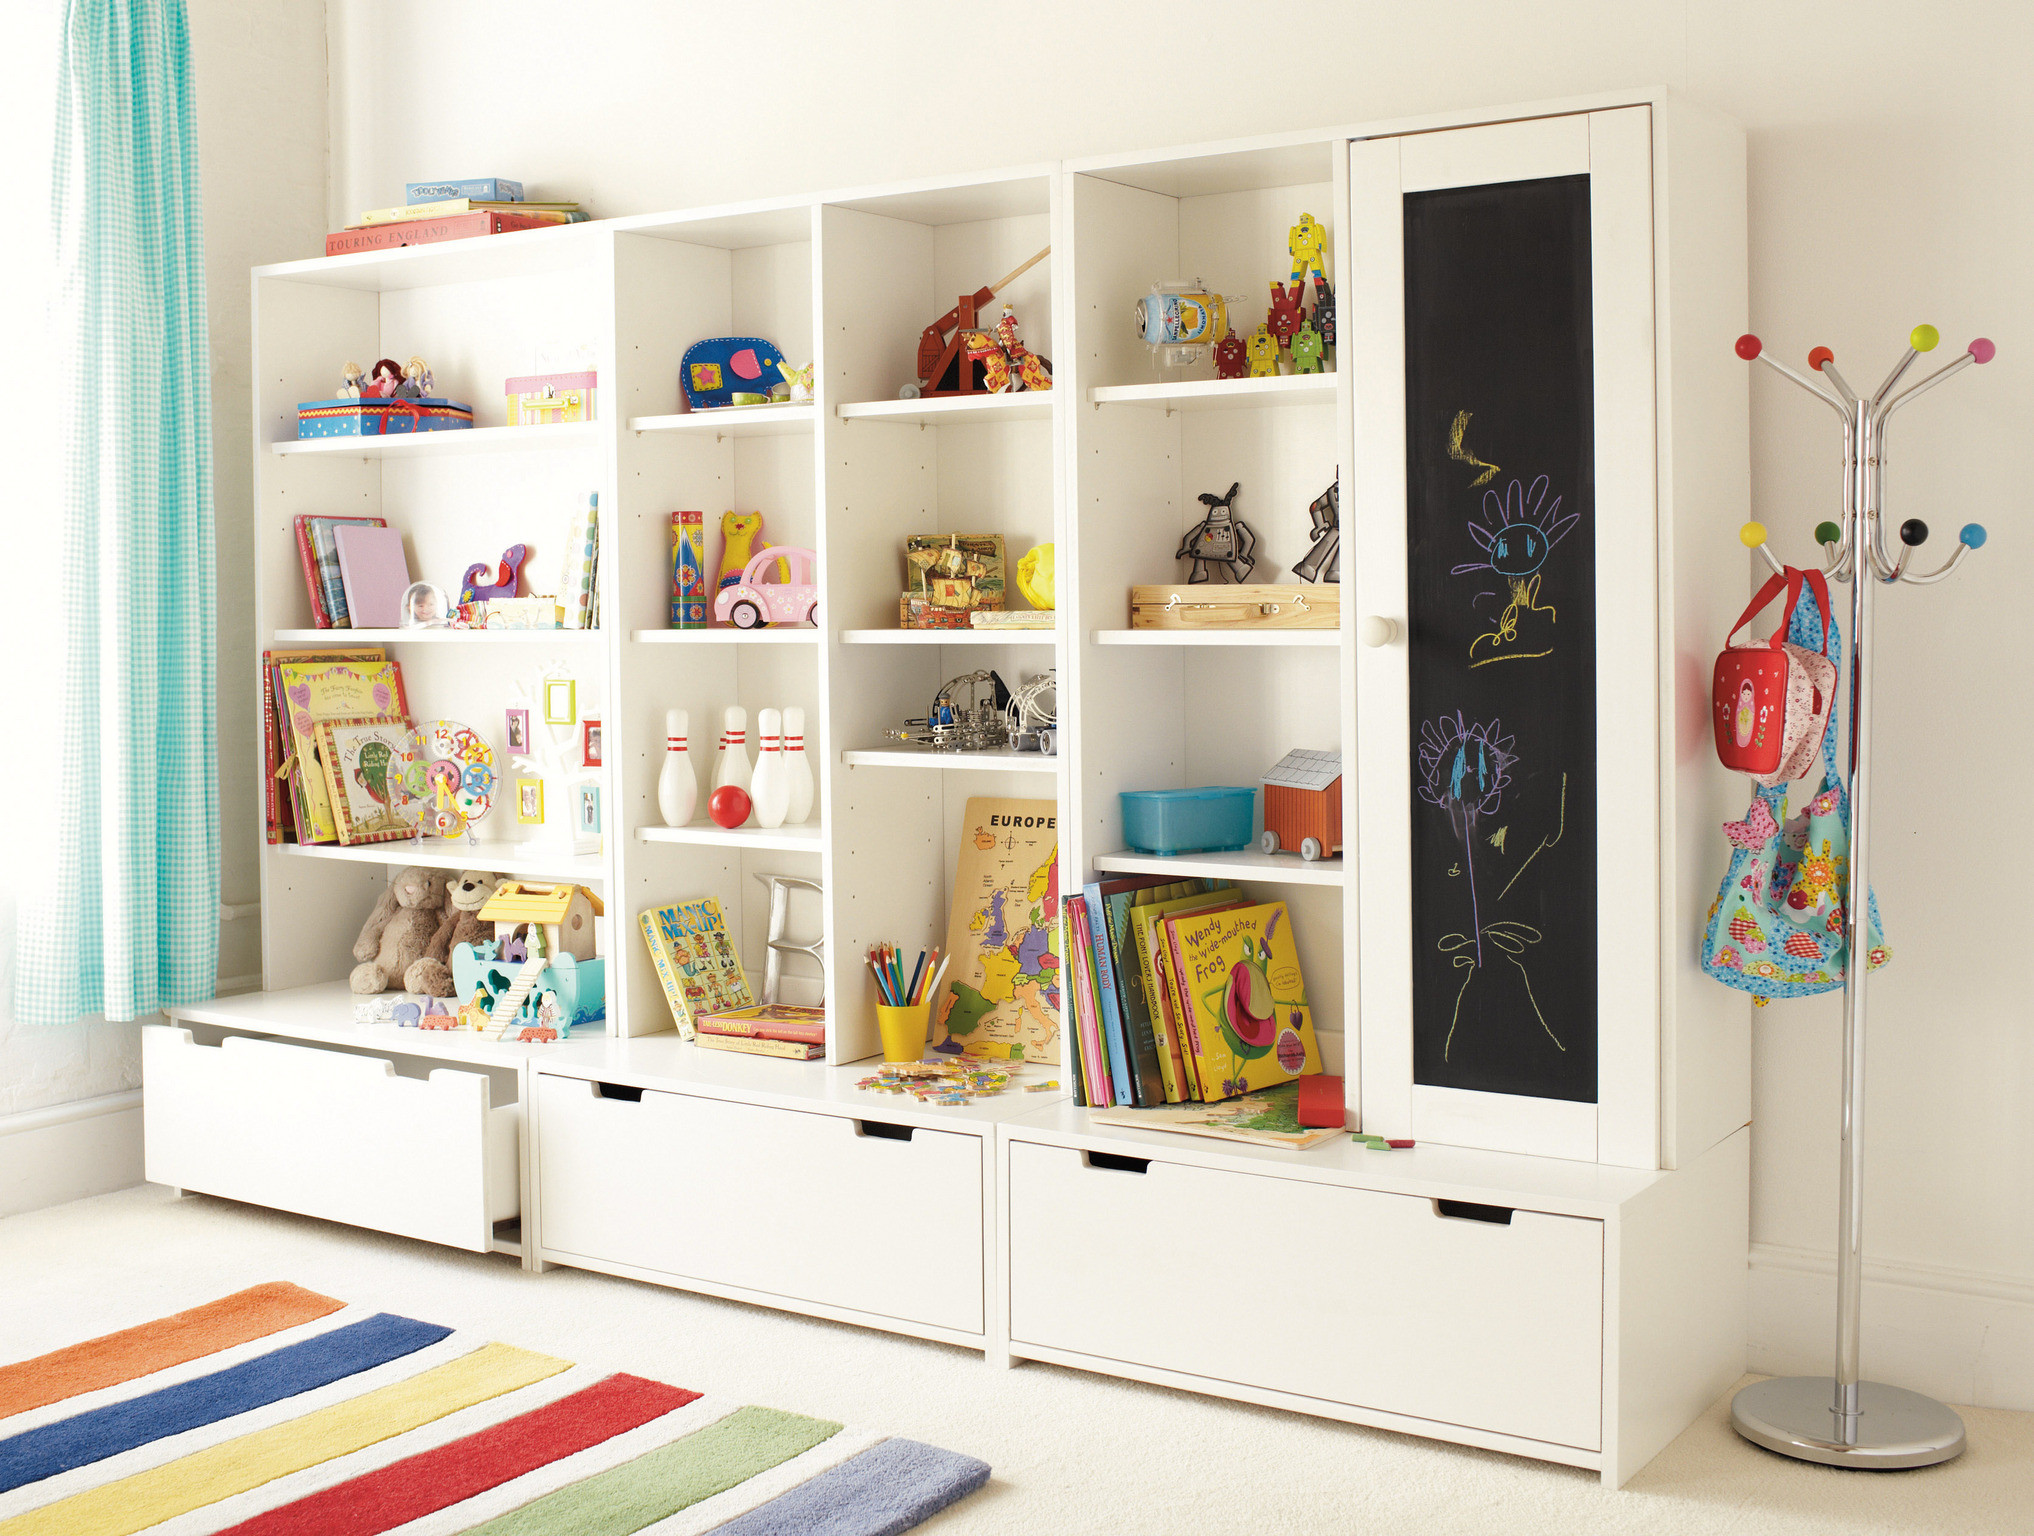 Kids Room Shelving
 Most Precise Children’s Playroom Storage Ideas 42 Room